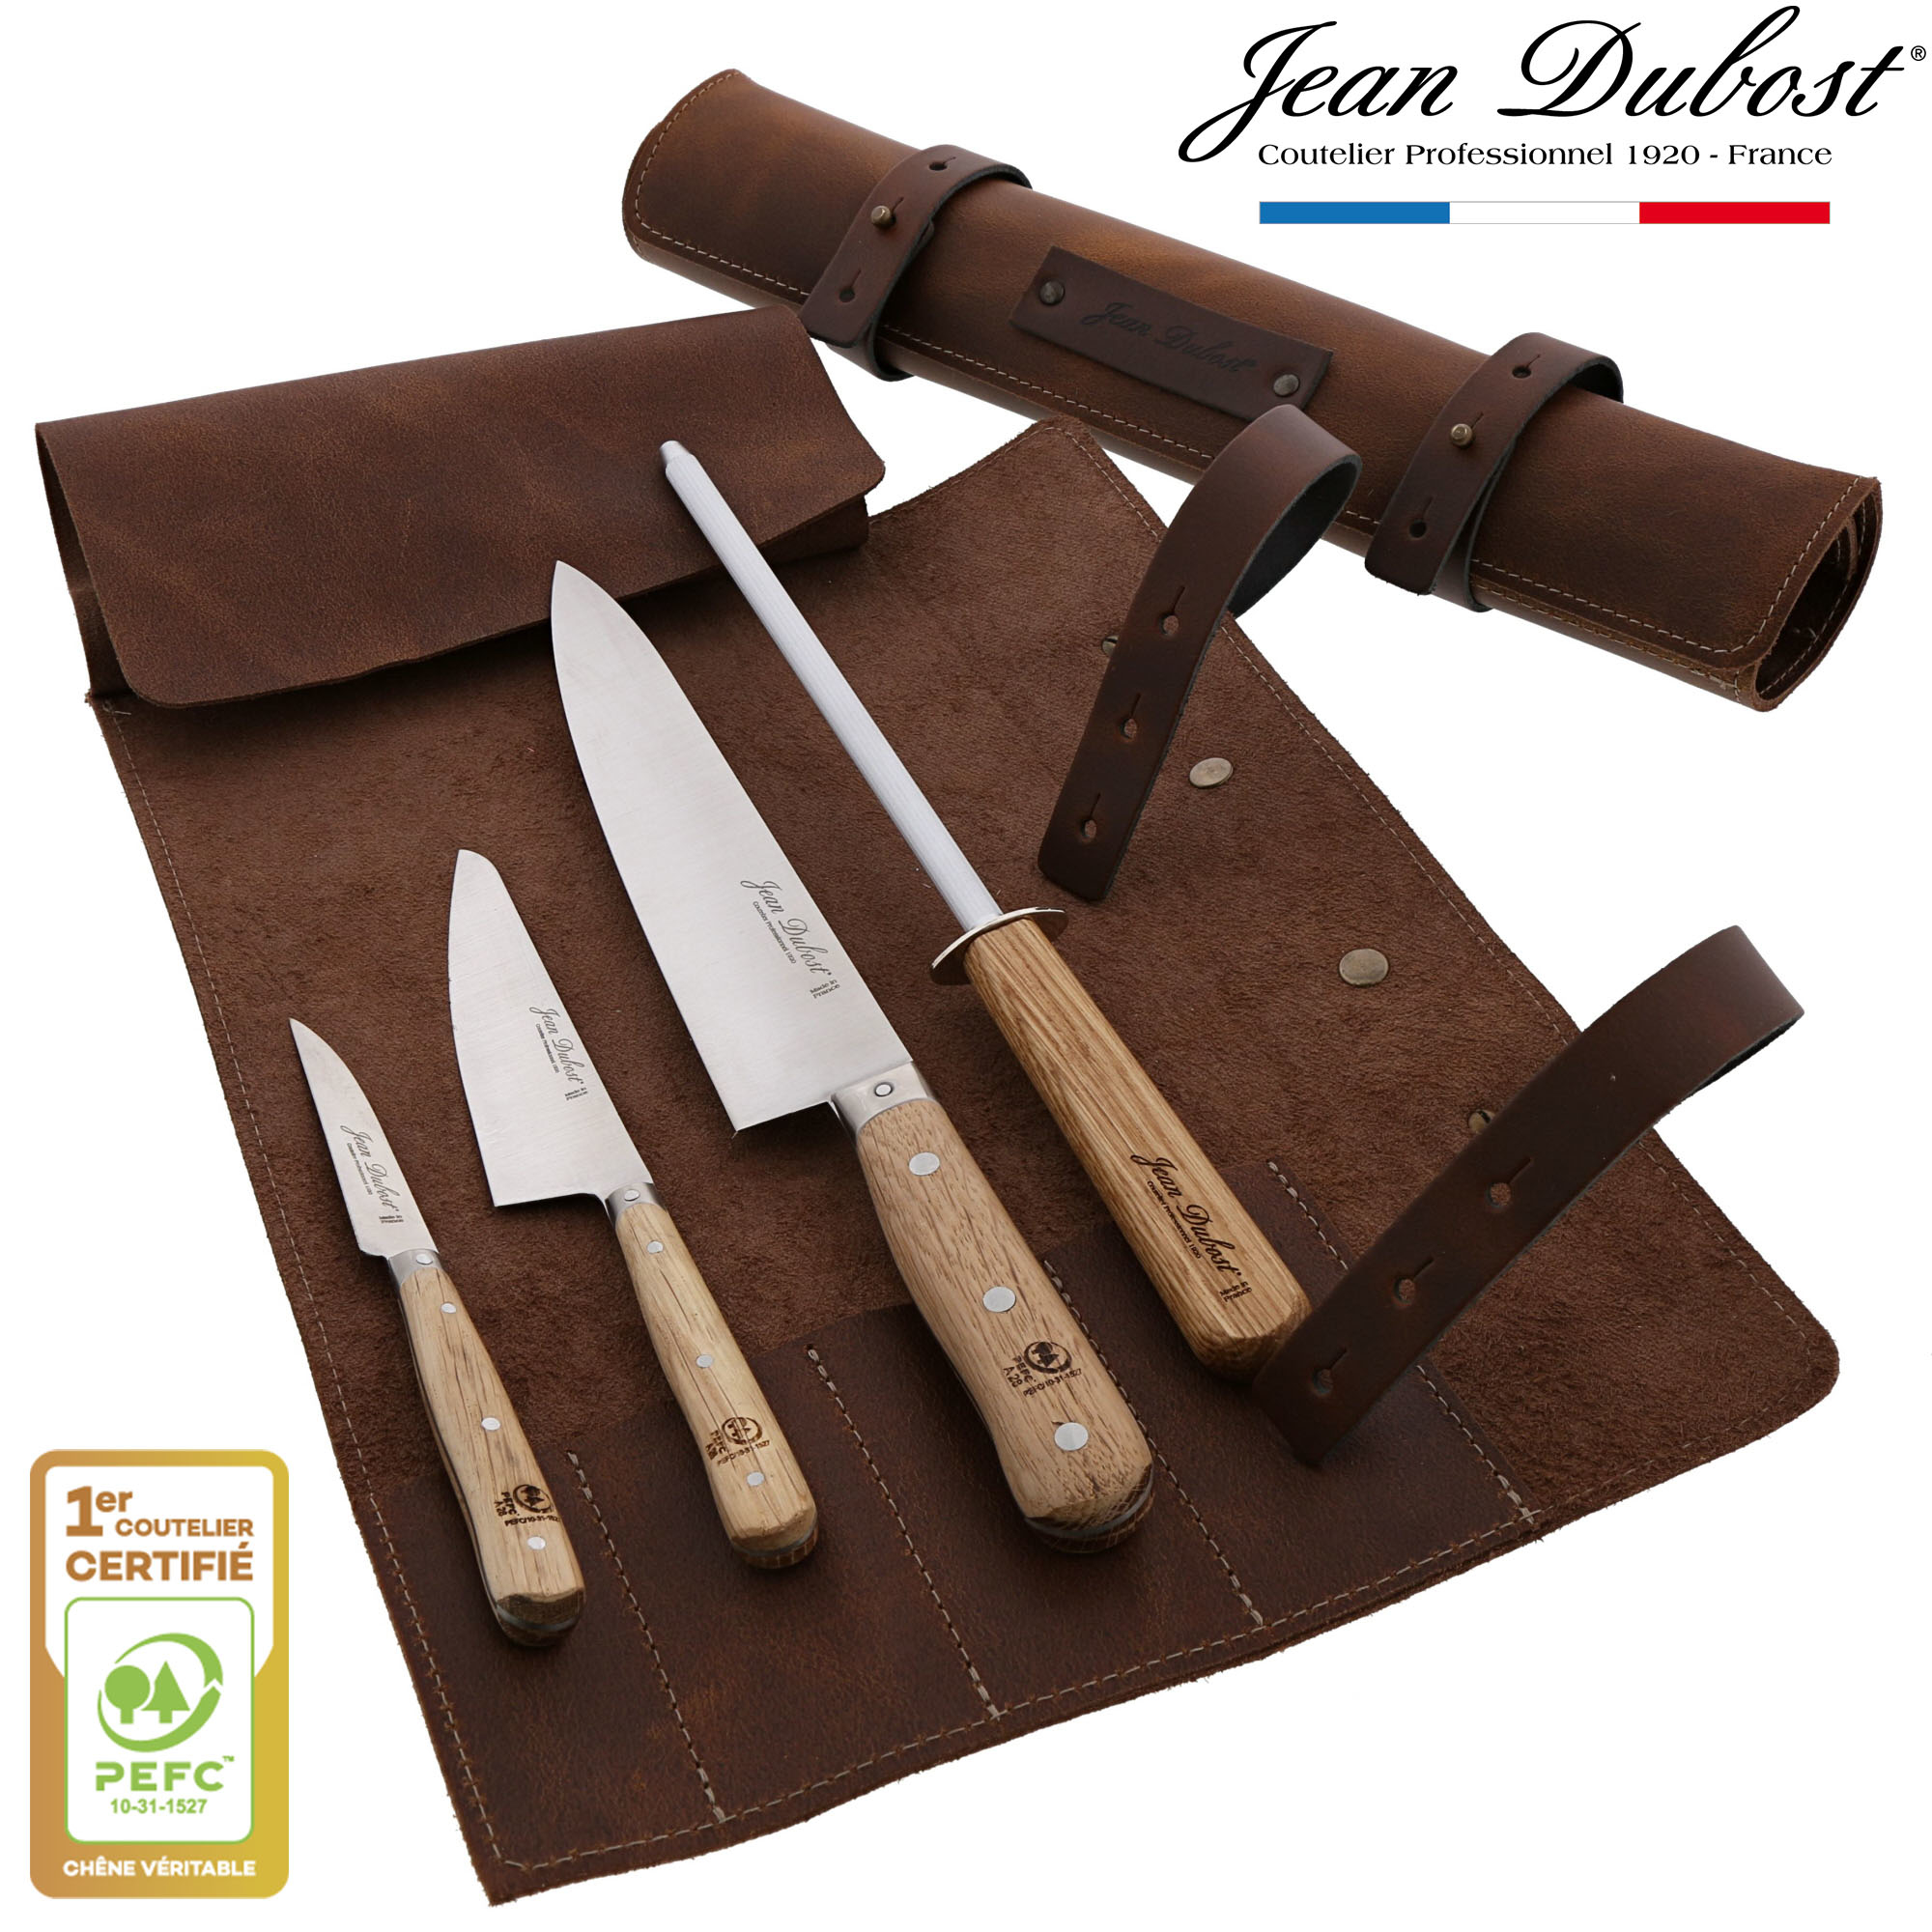 Sacoche du cuisinier Jean Dubost - Collection 1920 chene certifié PEFC (Programme for the Endorsement of Forest Certification)